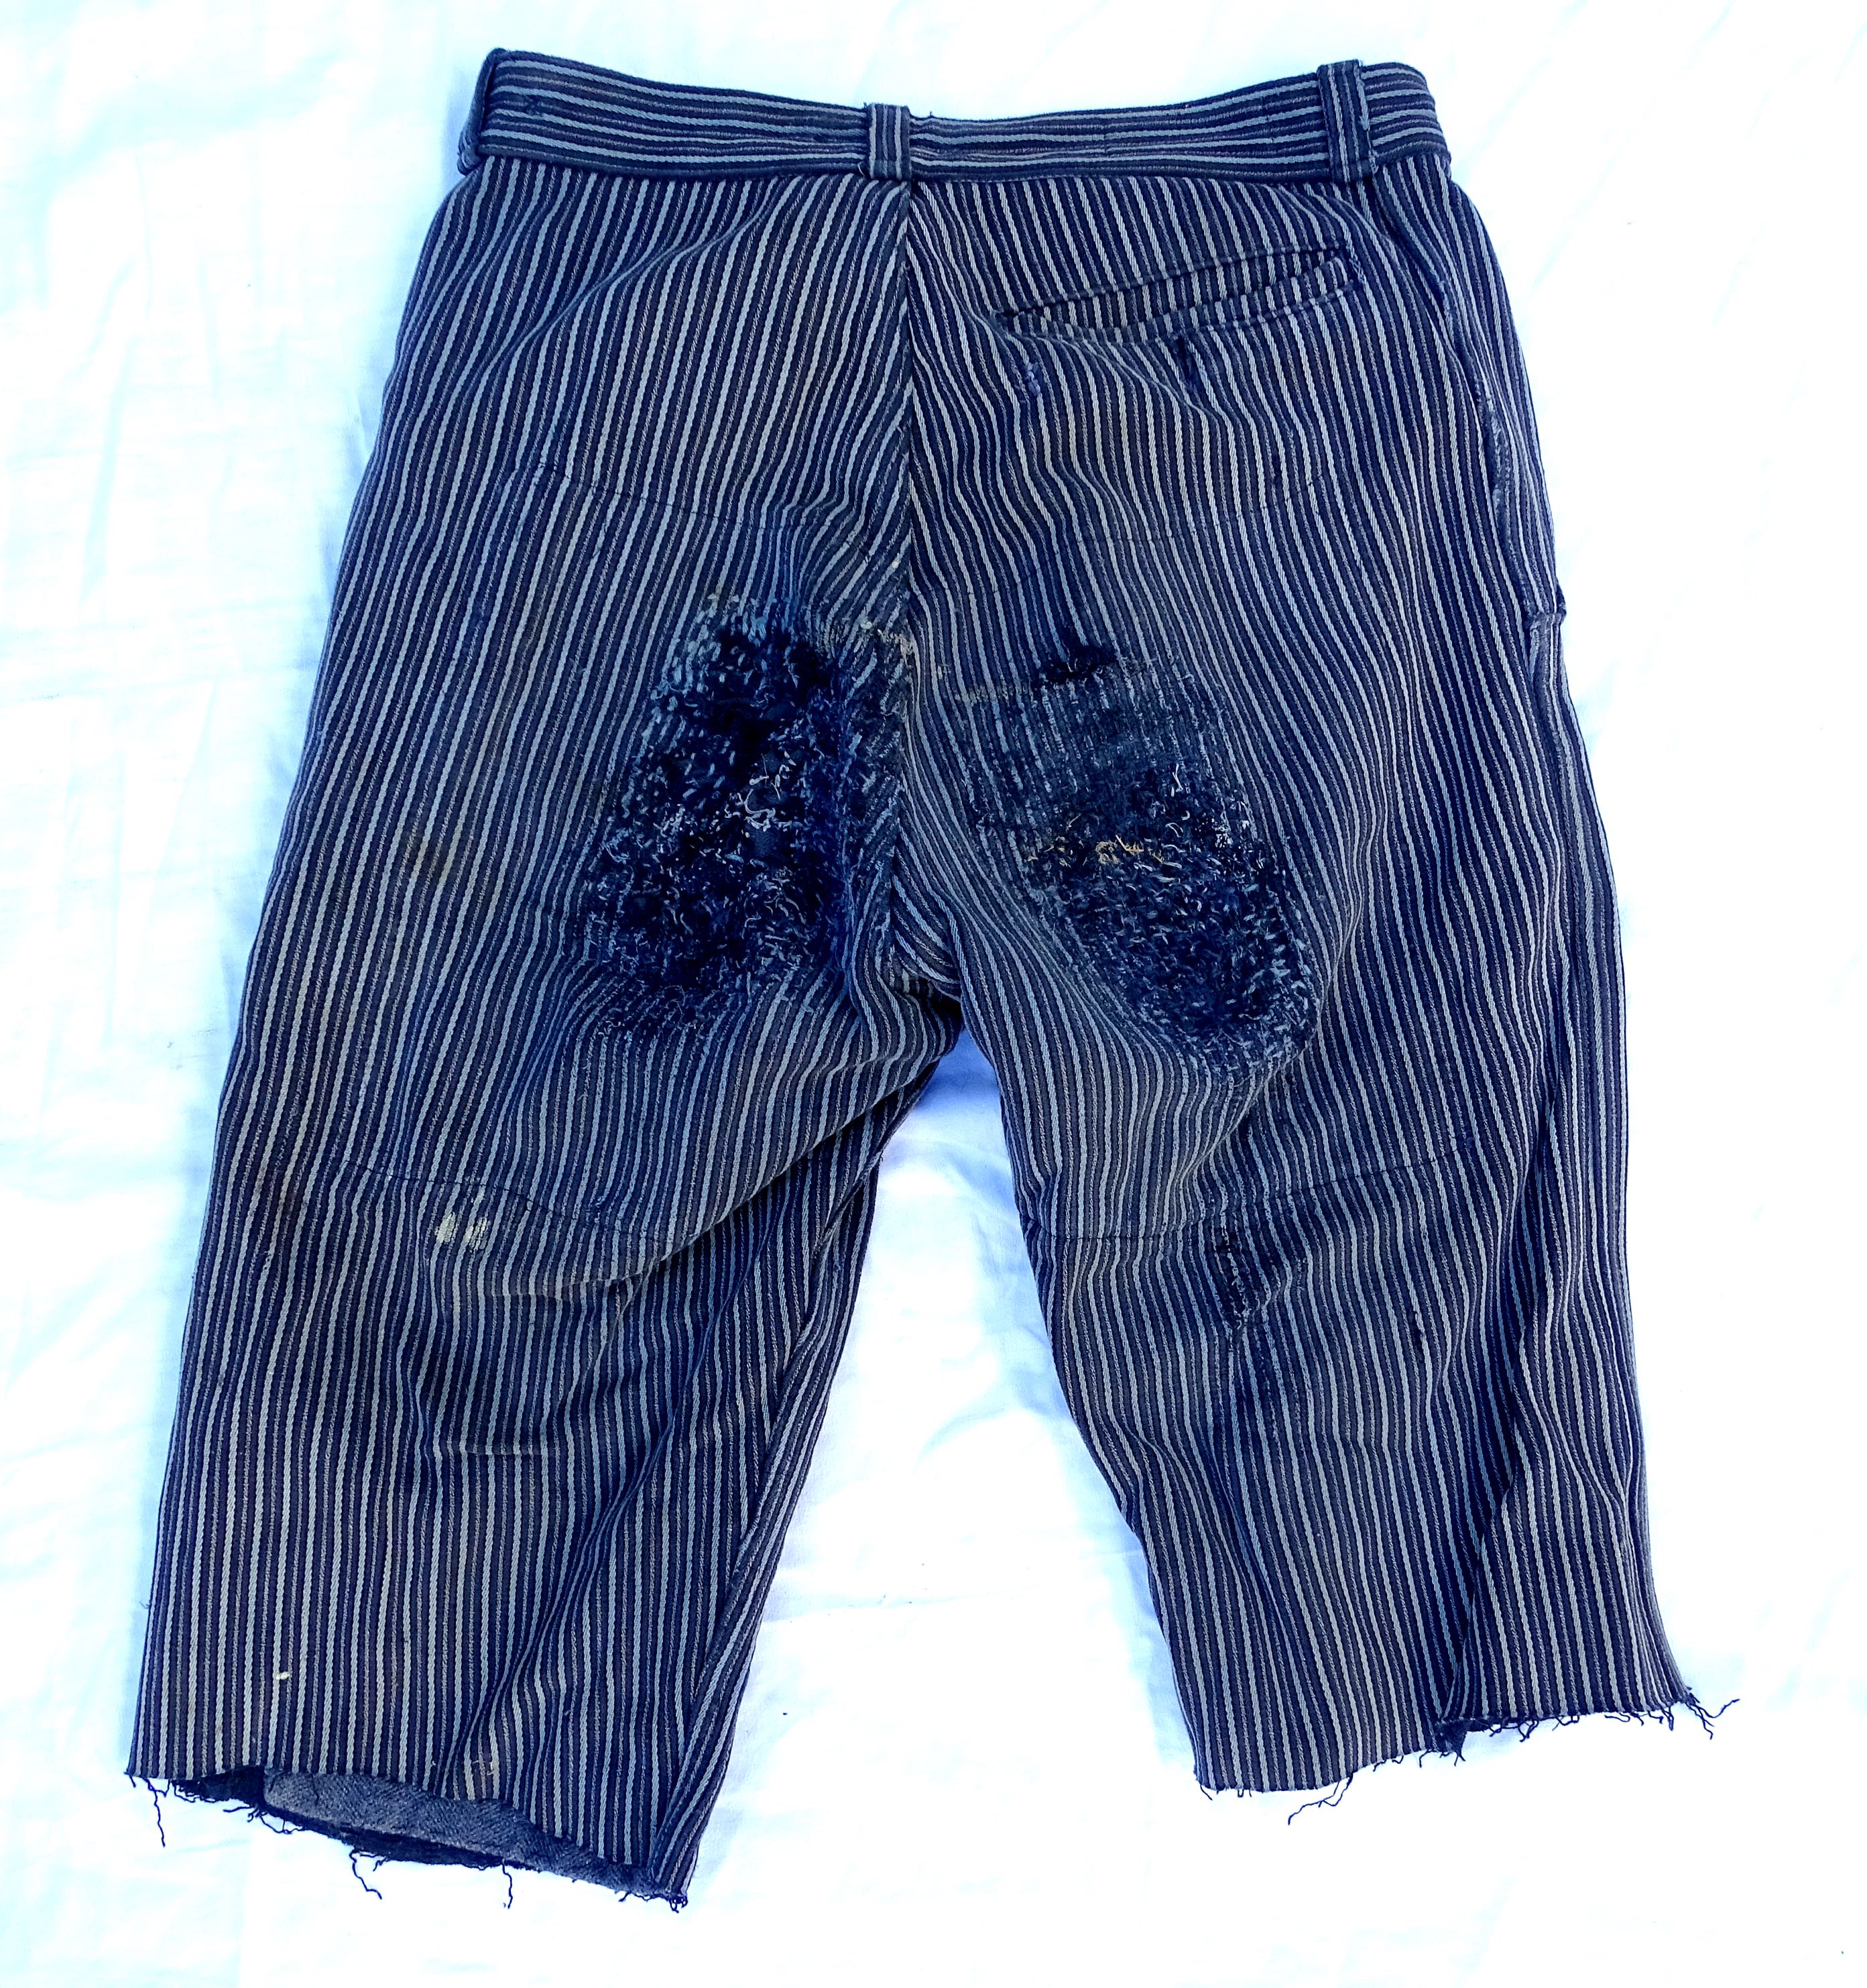 Corsair shorts vintage work pants